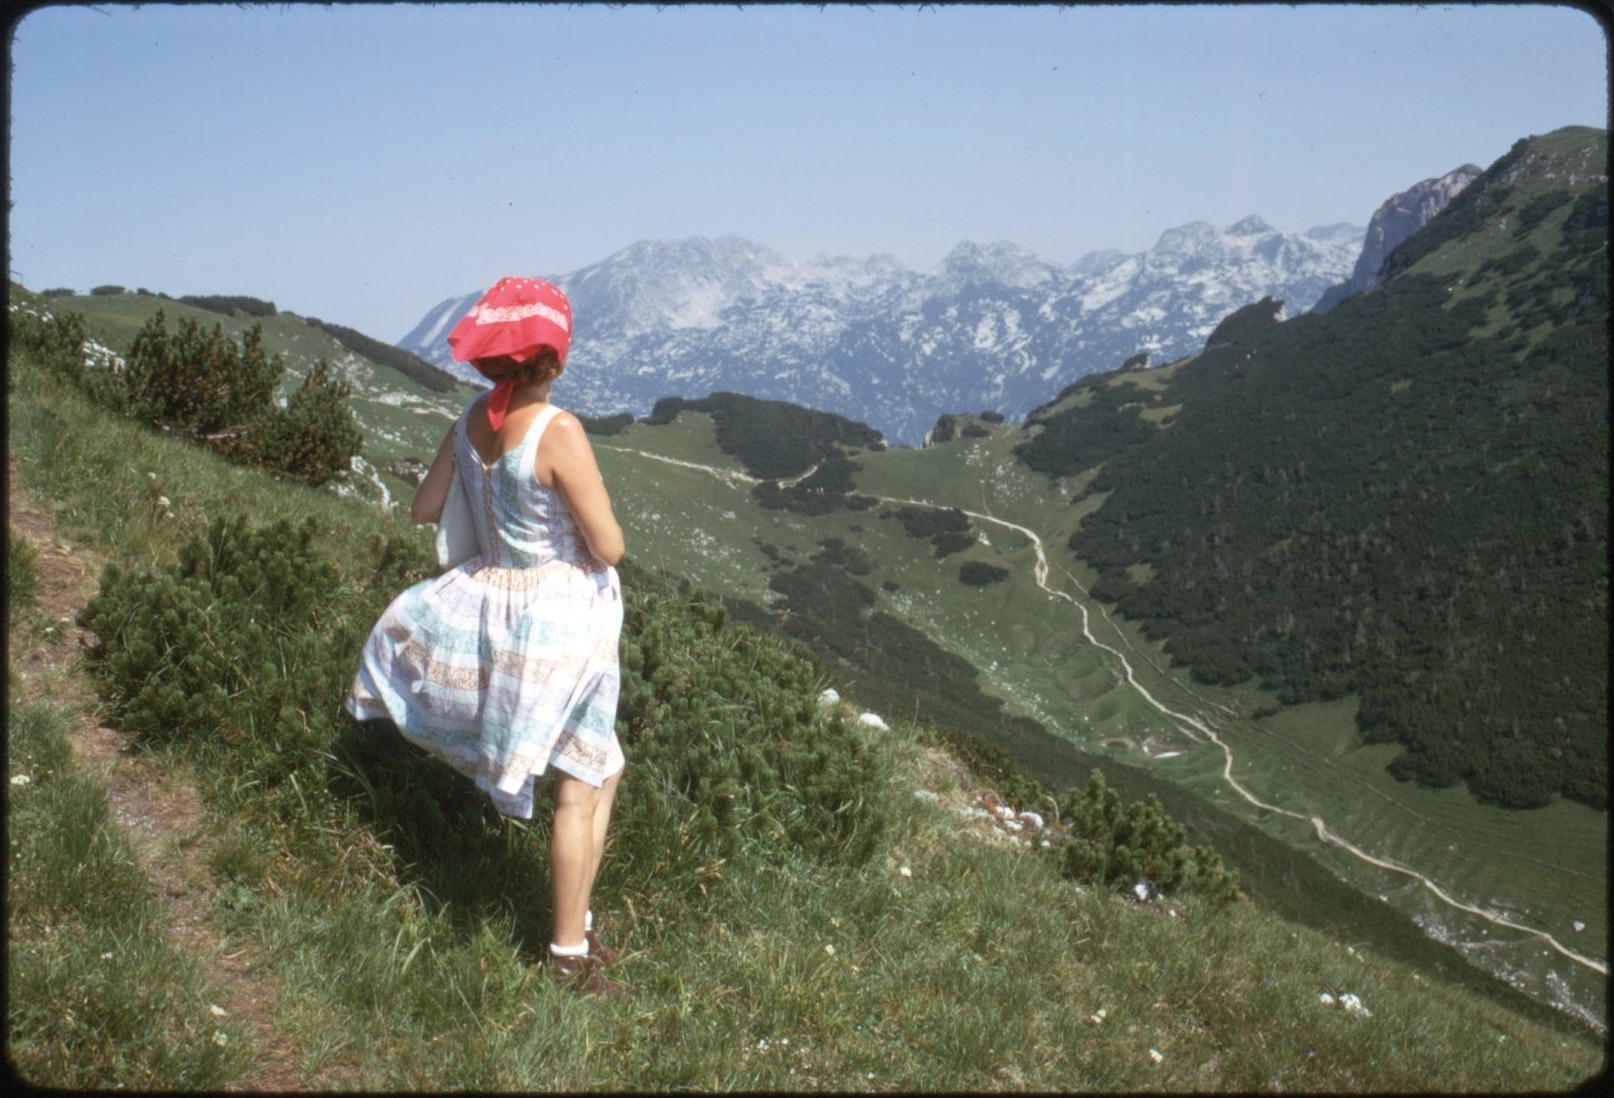 twoseparatecoursesmeet:Hiking in the Alps, 1970s